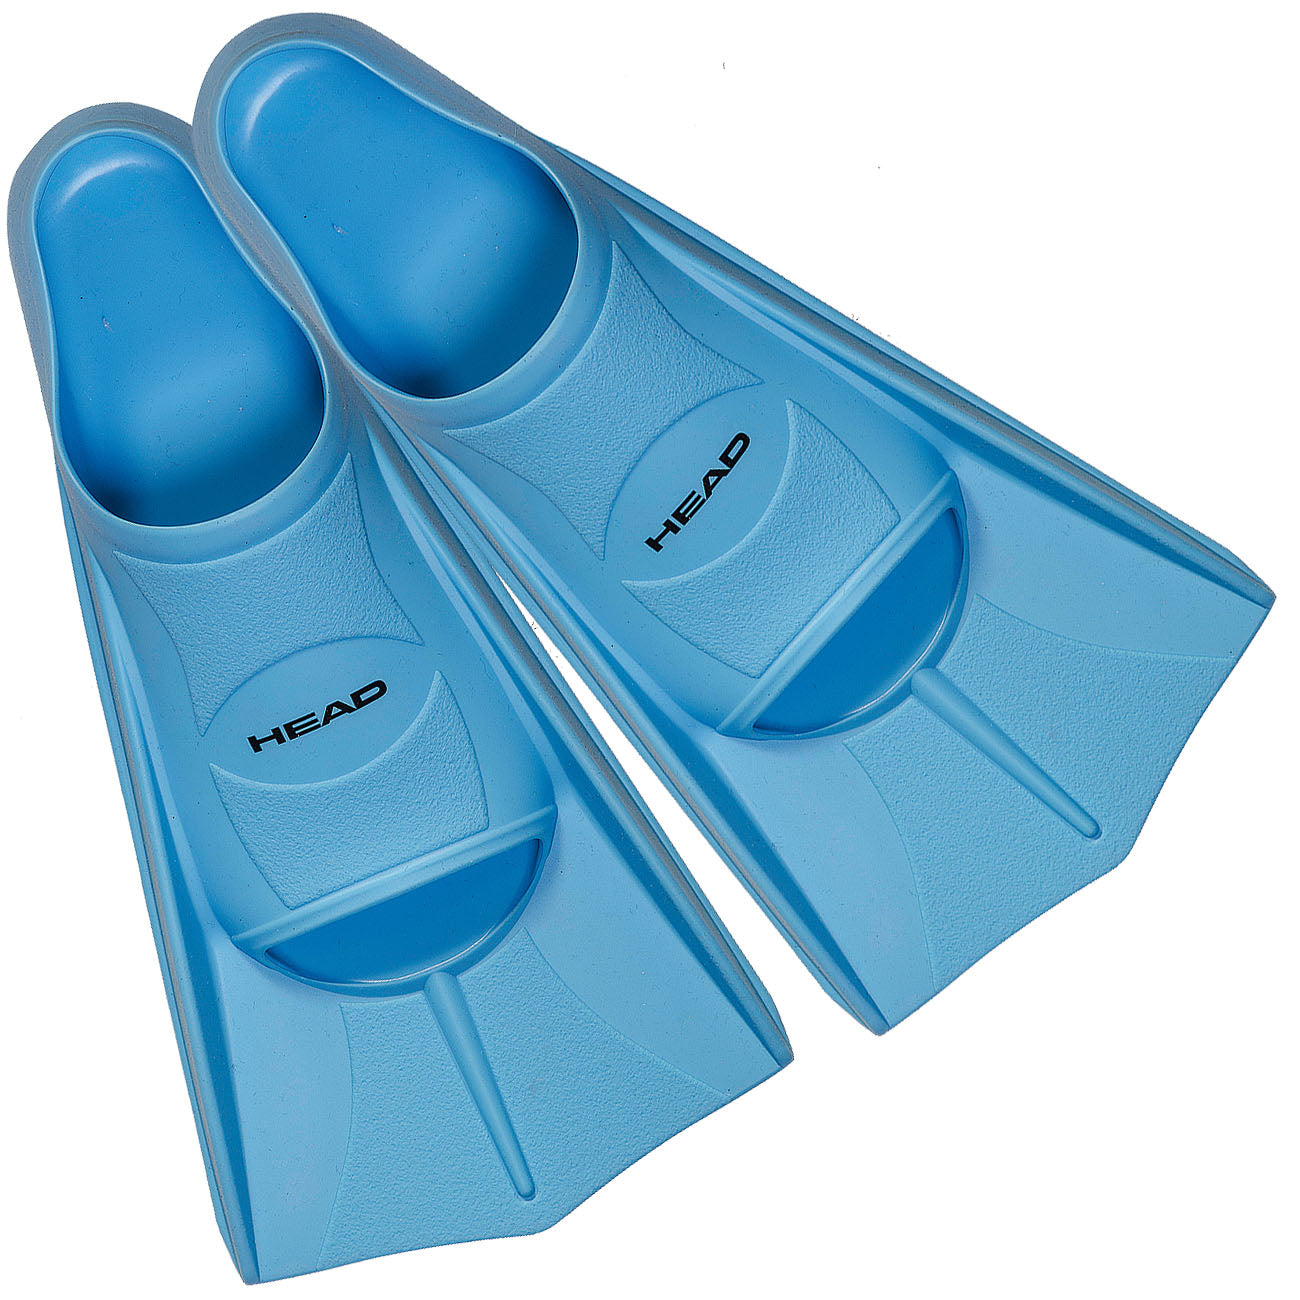 Head Soft Swim Training Fins - Size 33-34 light blue